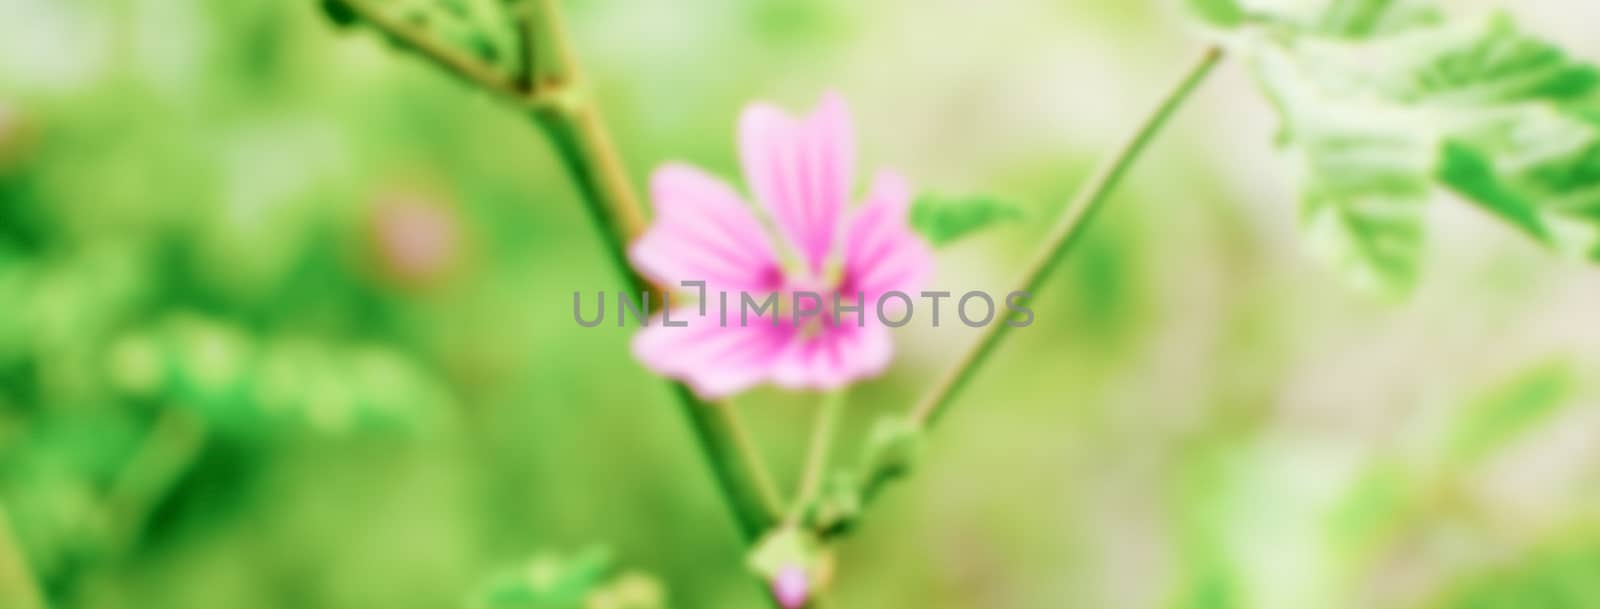 Defocused background of a purple wild flower on a green field by marcorubino